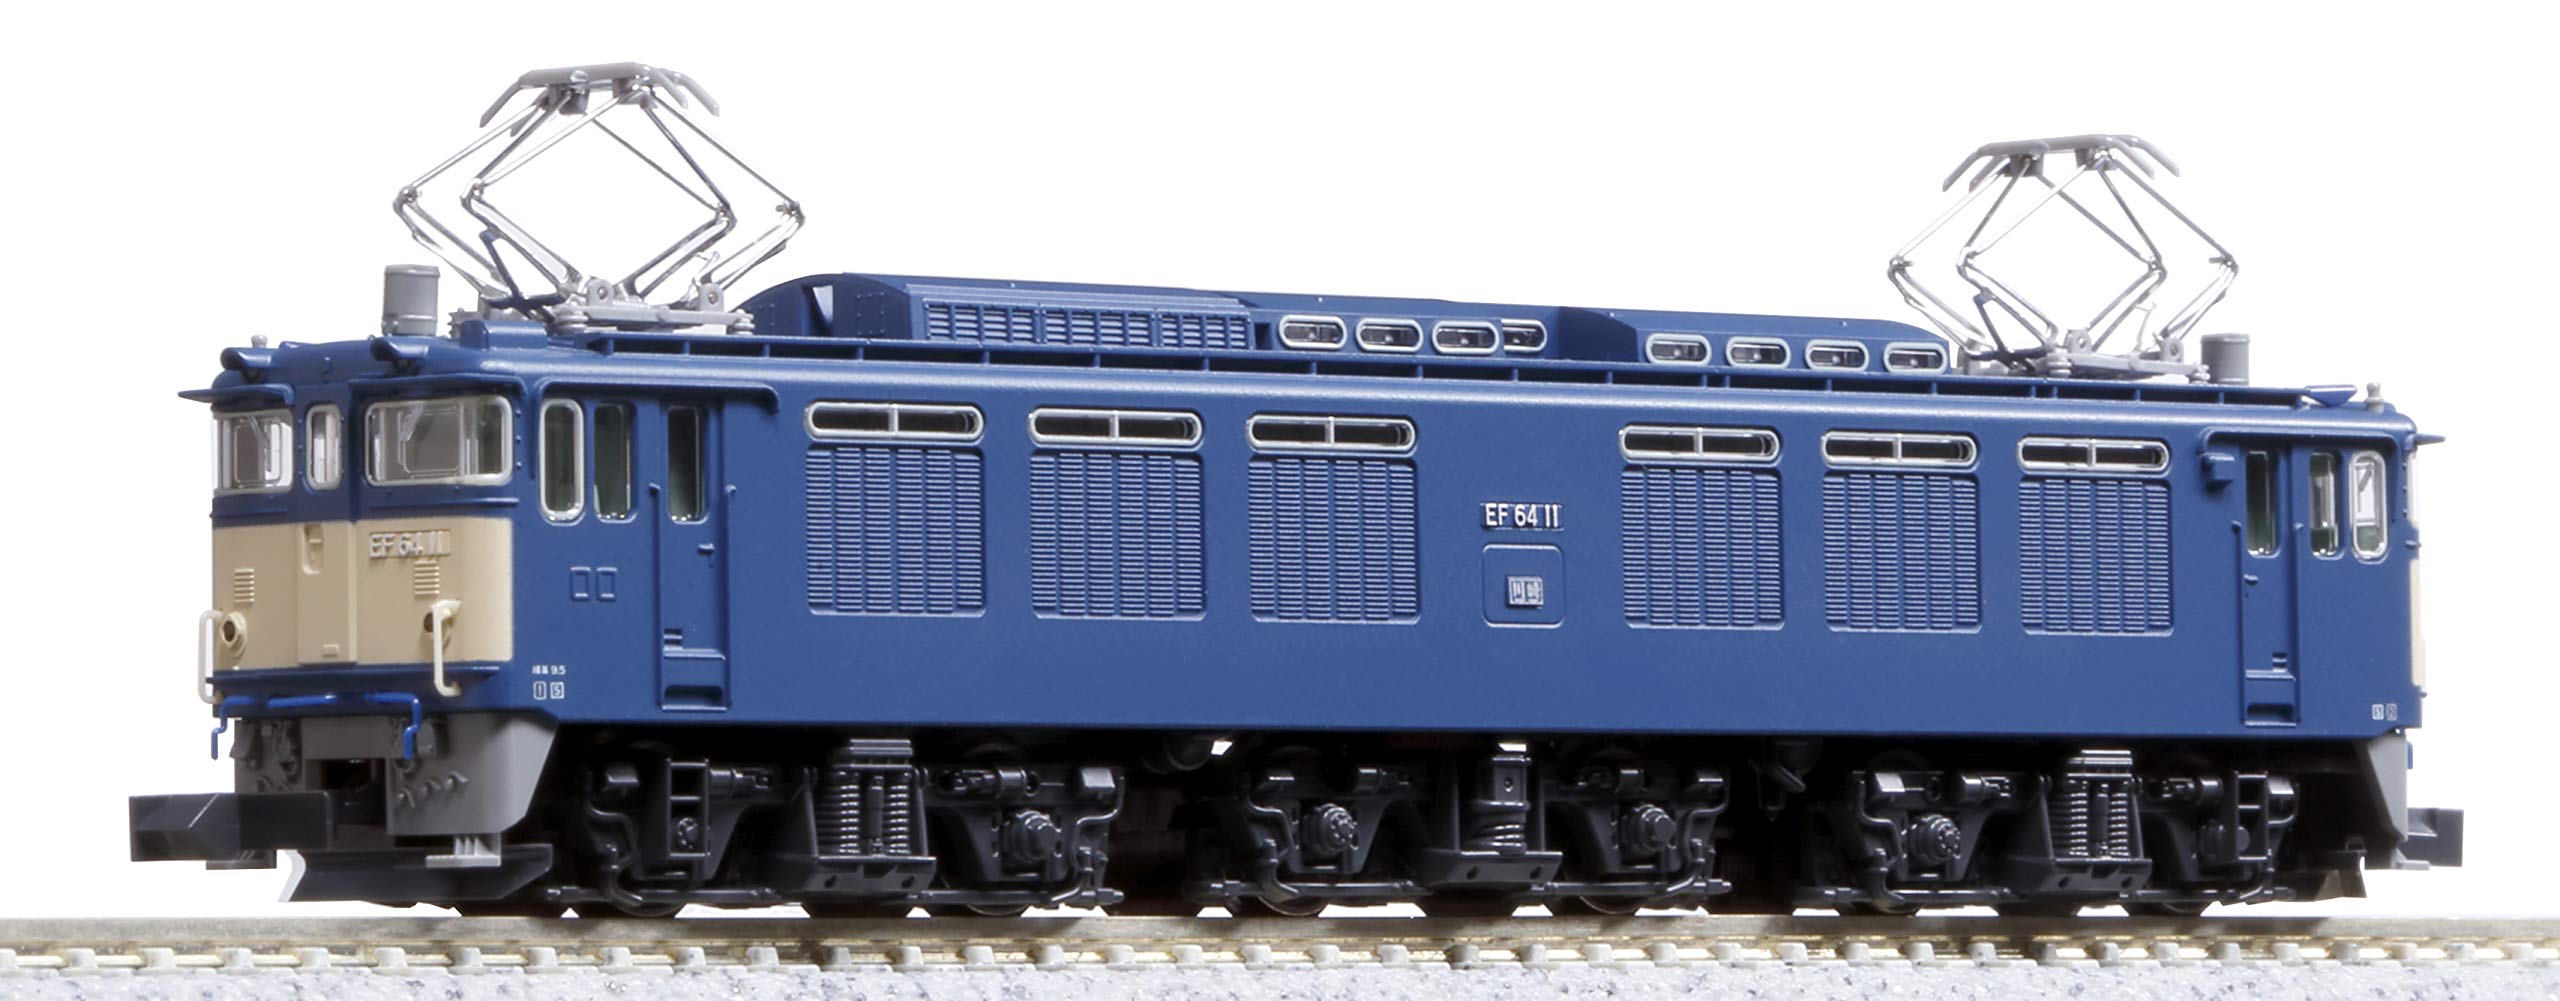 Kato Railway Electric Locomotive Model N Gauge Ef64 0 Primary Type 3091-1